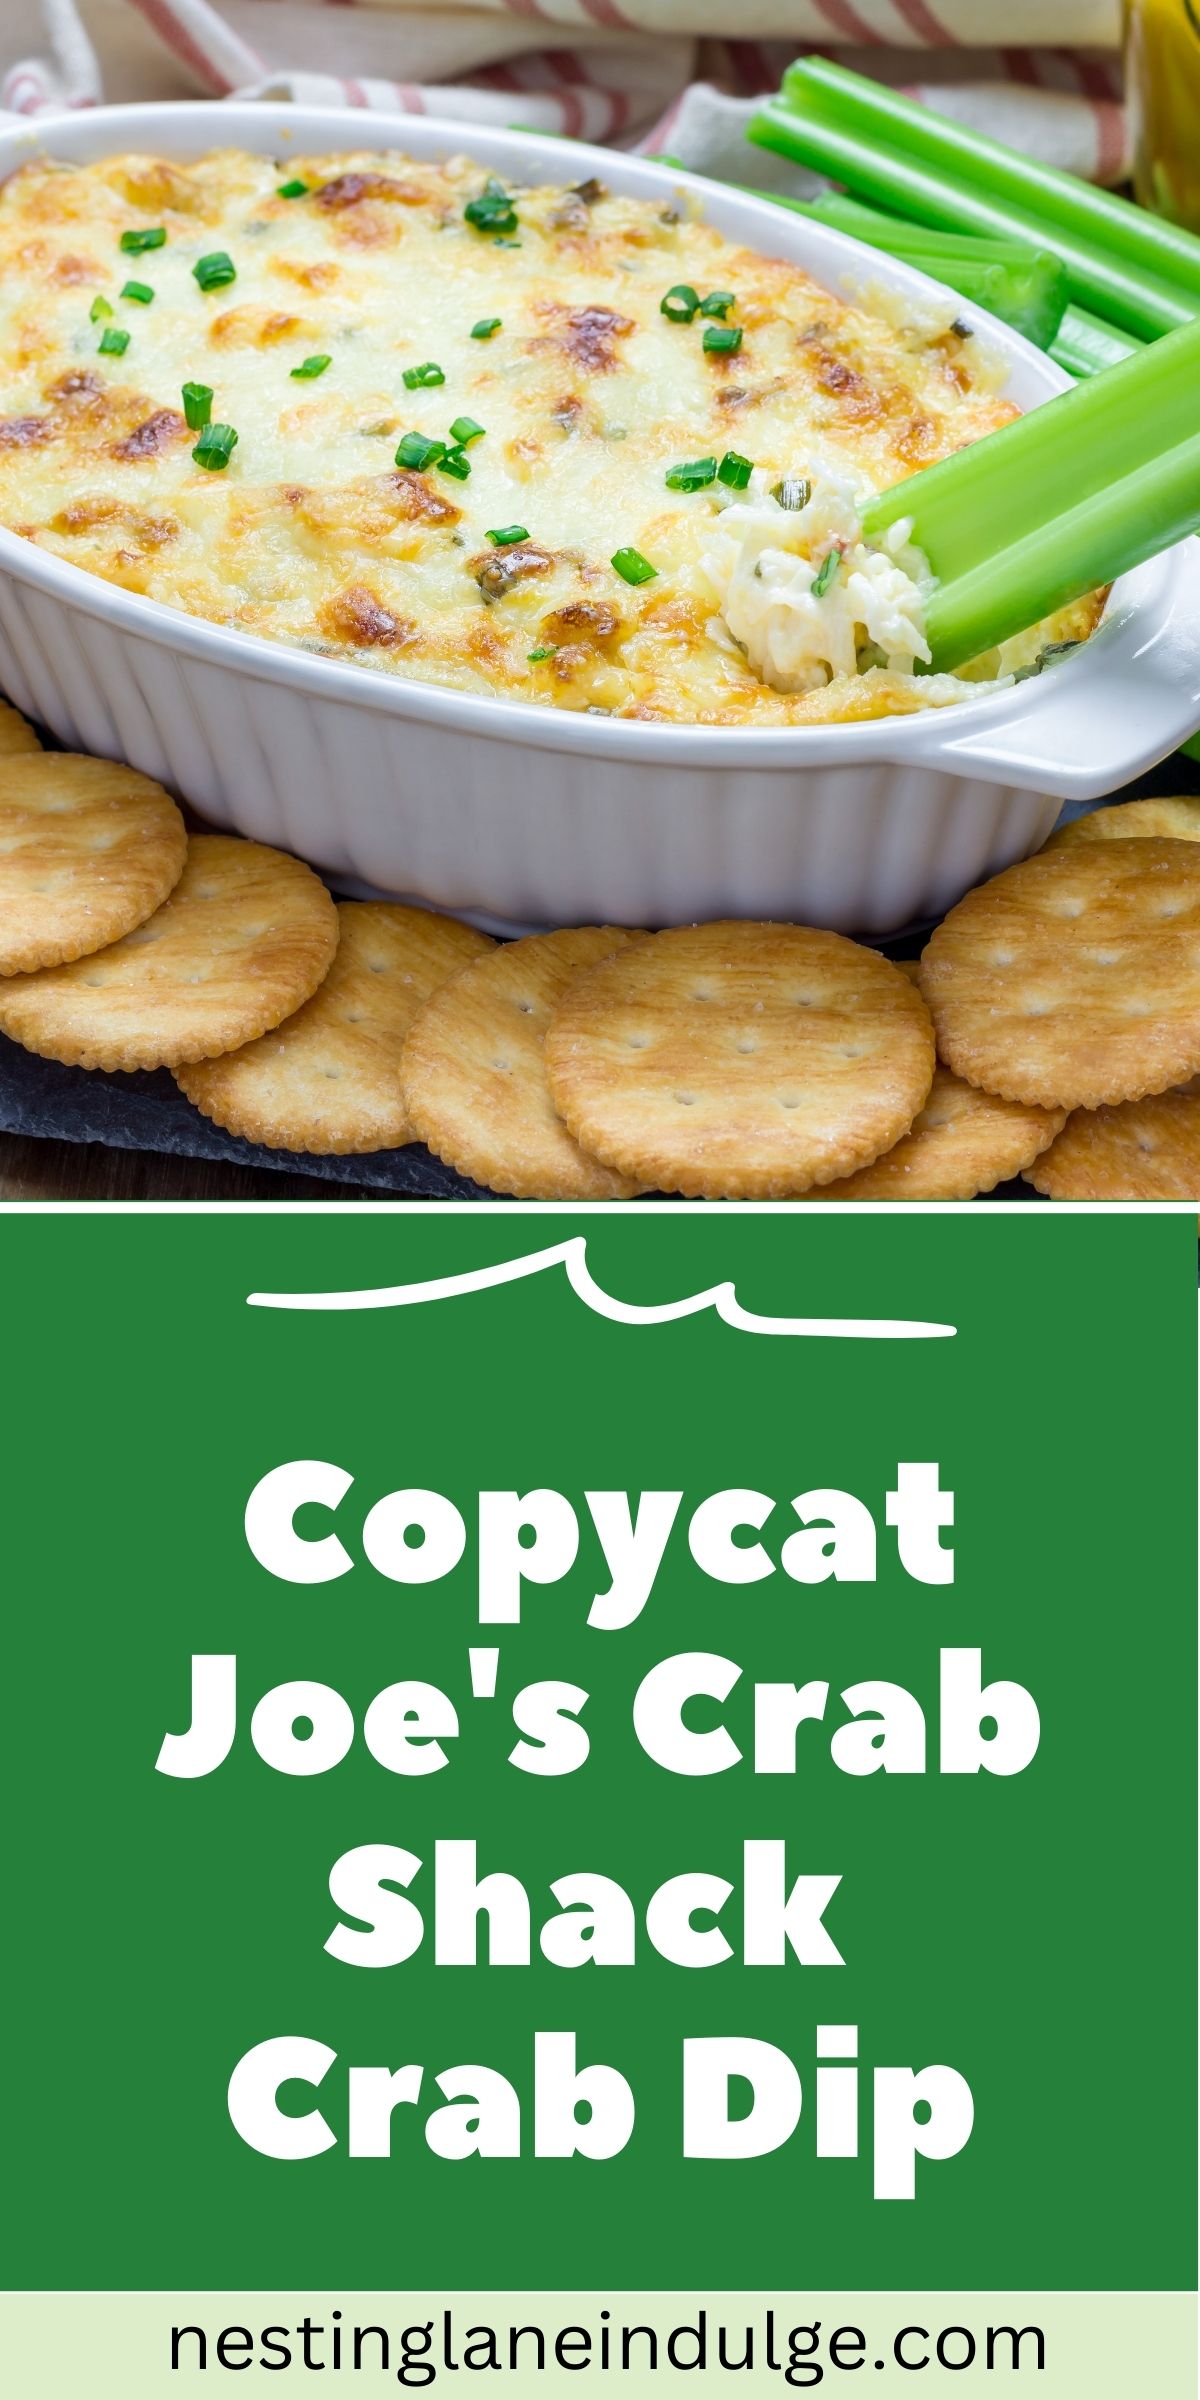 Graphic for Pinterest of Copycat Joe's Crab Shack Crab Dip Recipe.